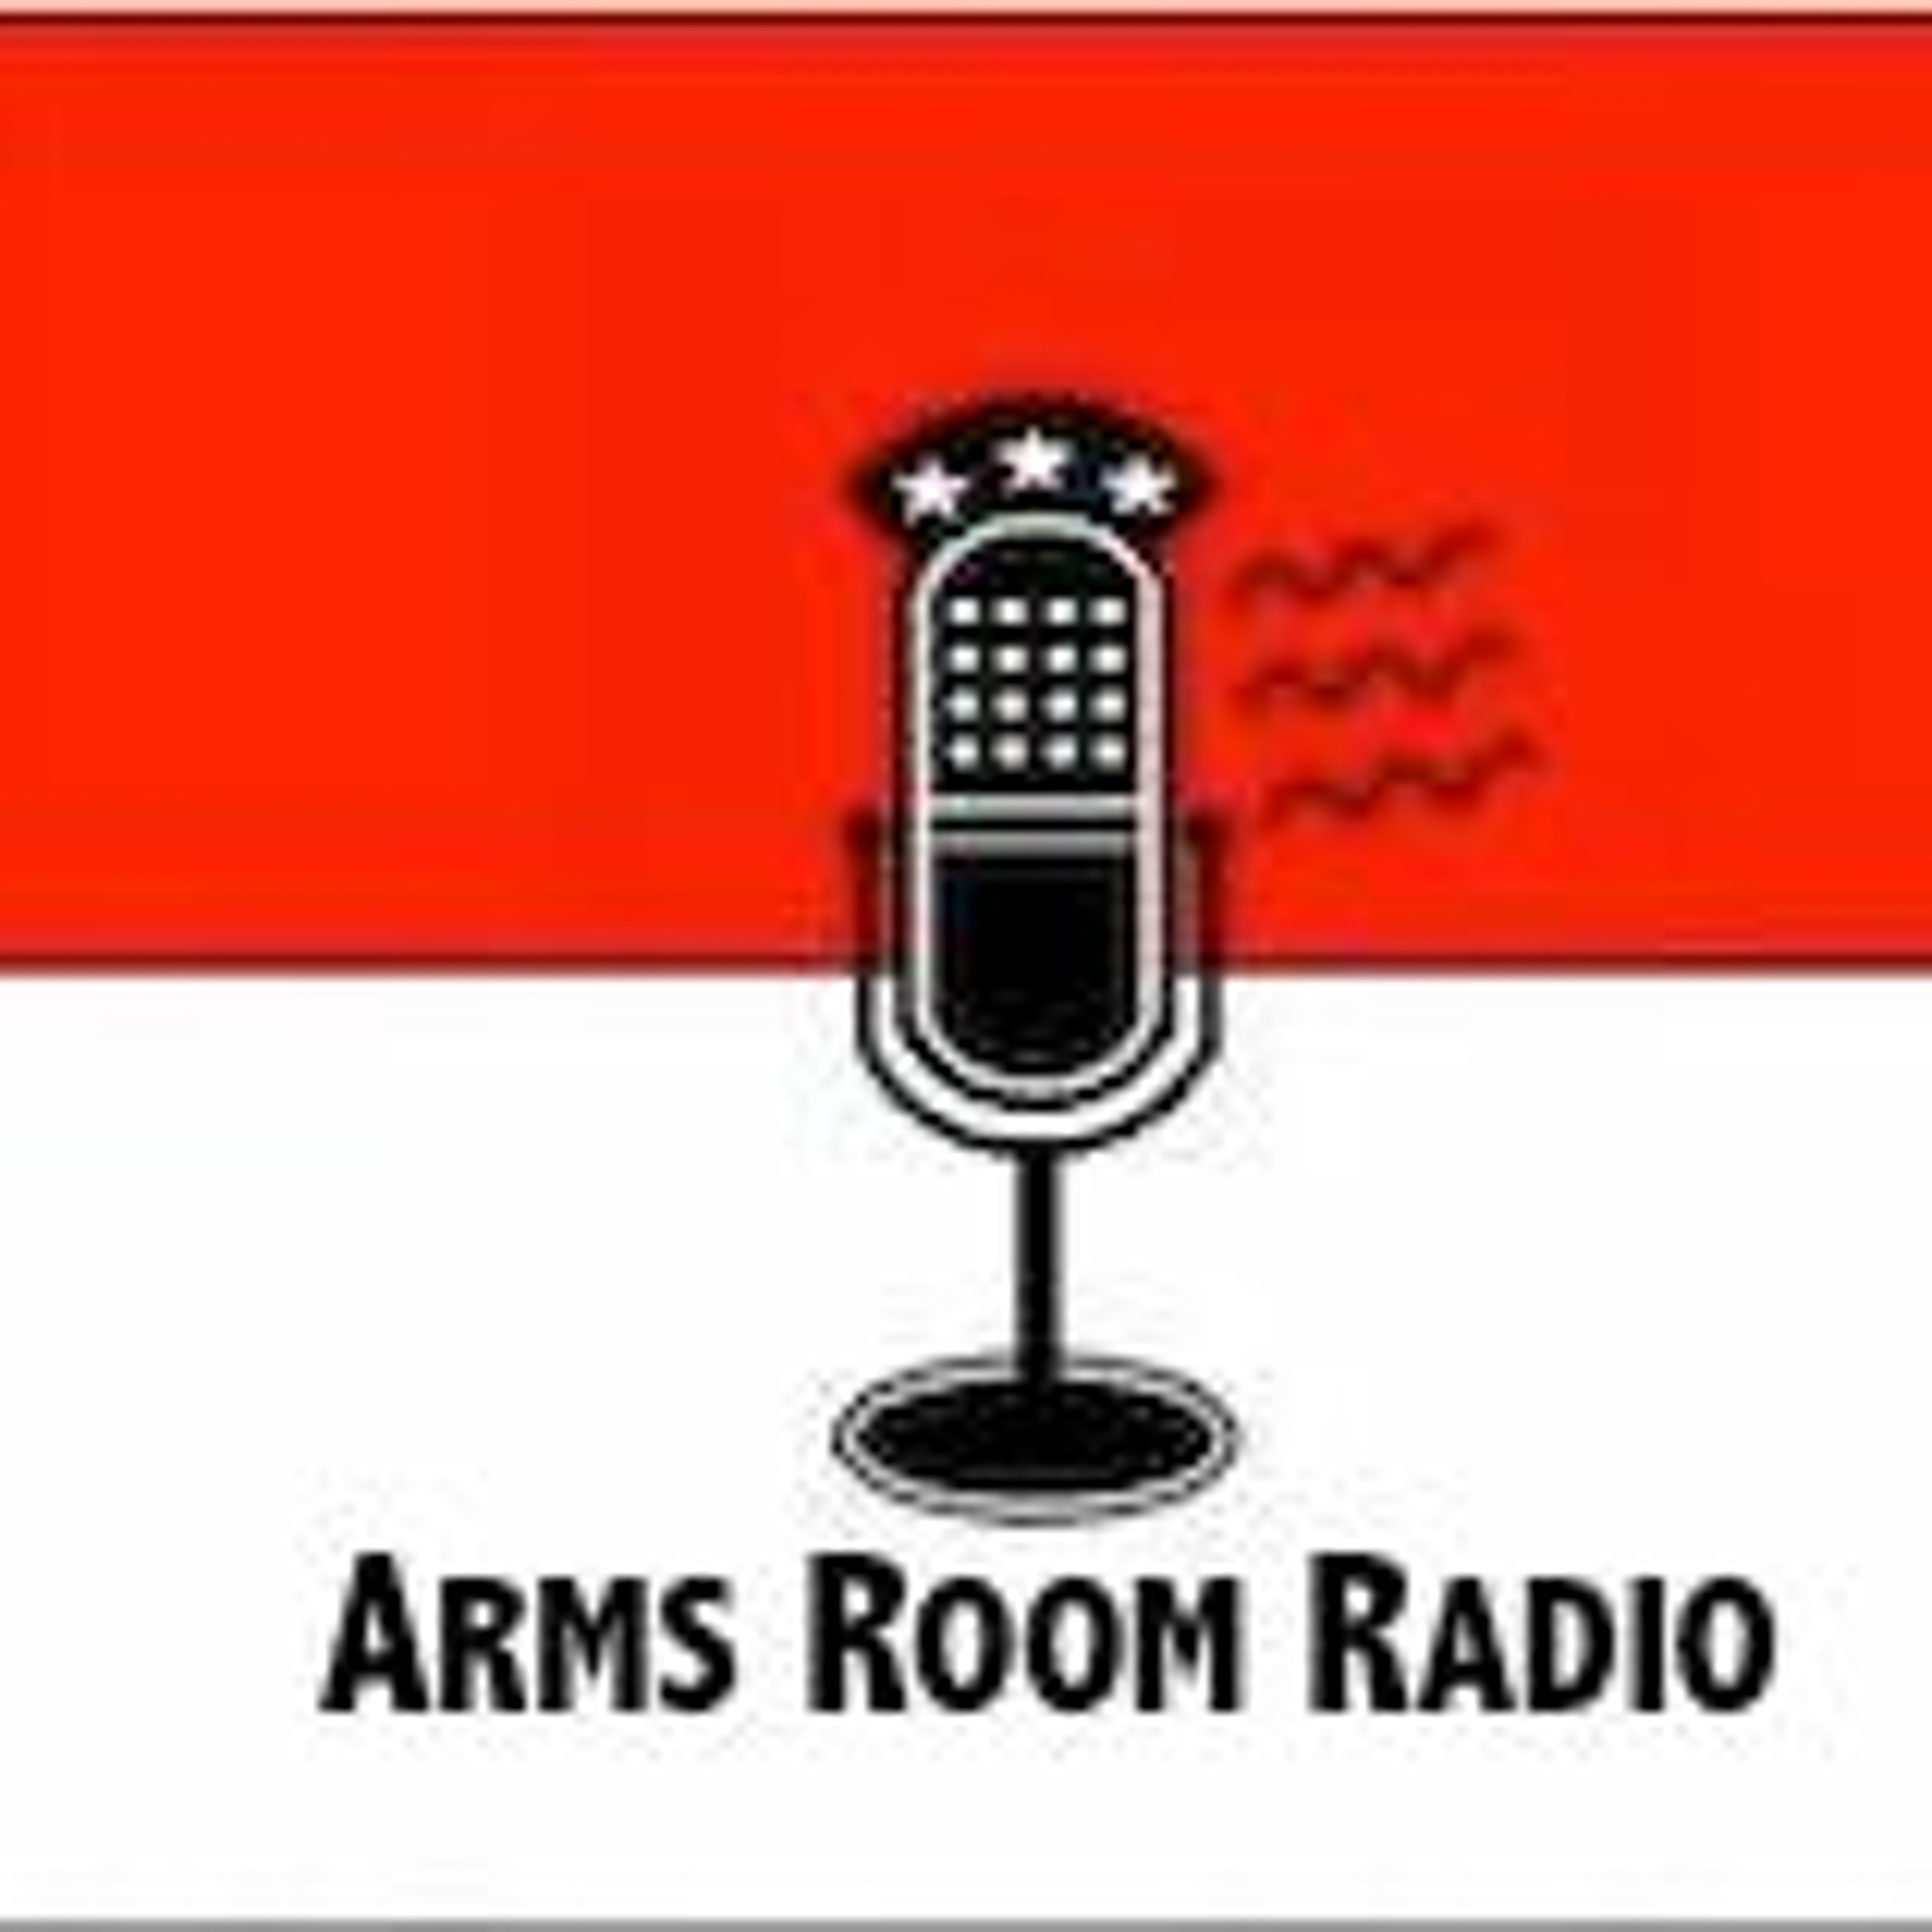 ArmsRoomRadio 07.17.21 Good news for Gun sales in 4th Circuit